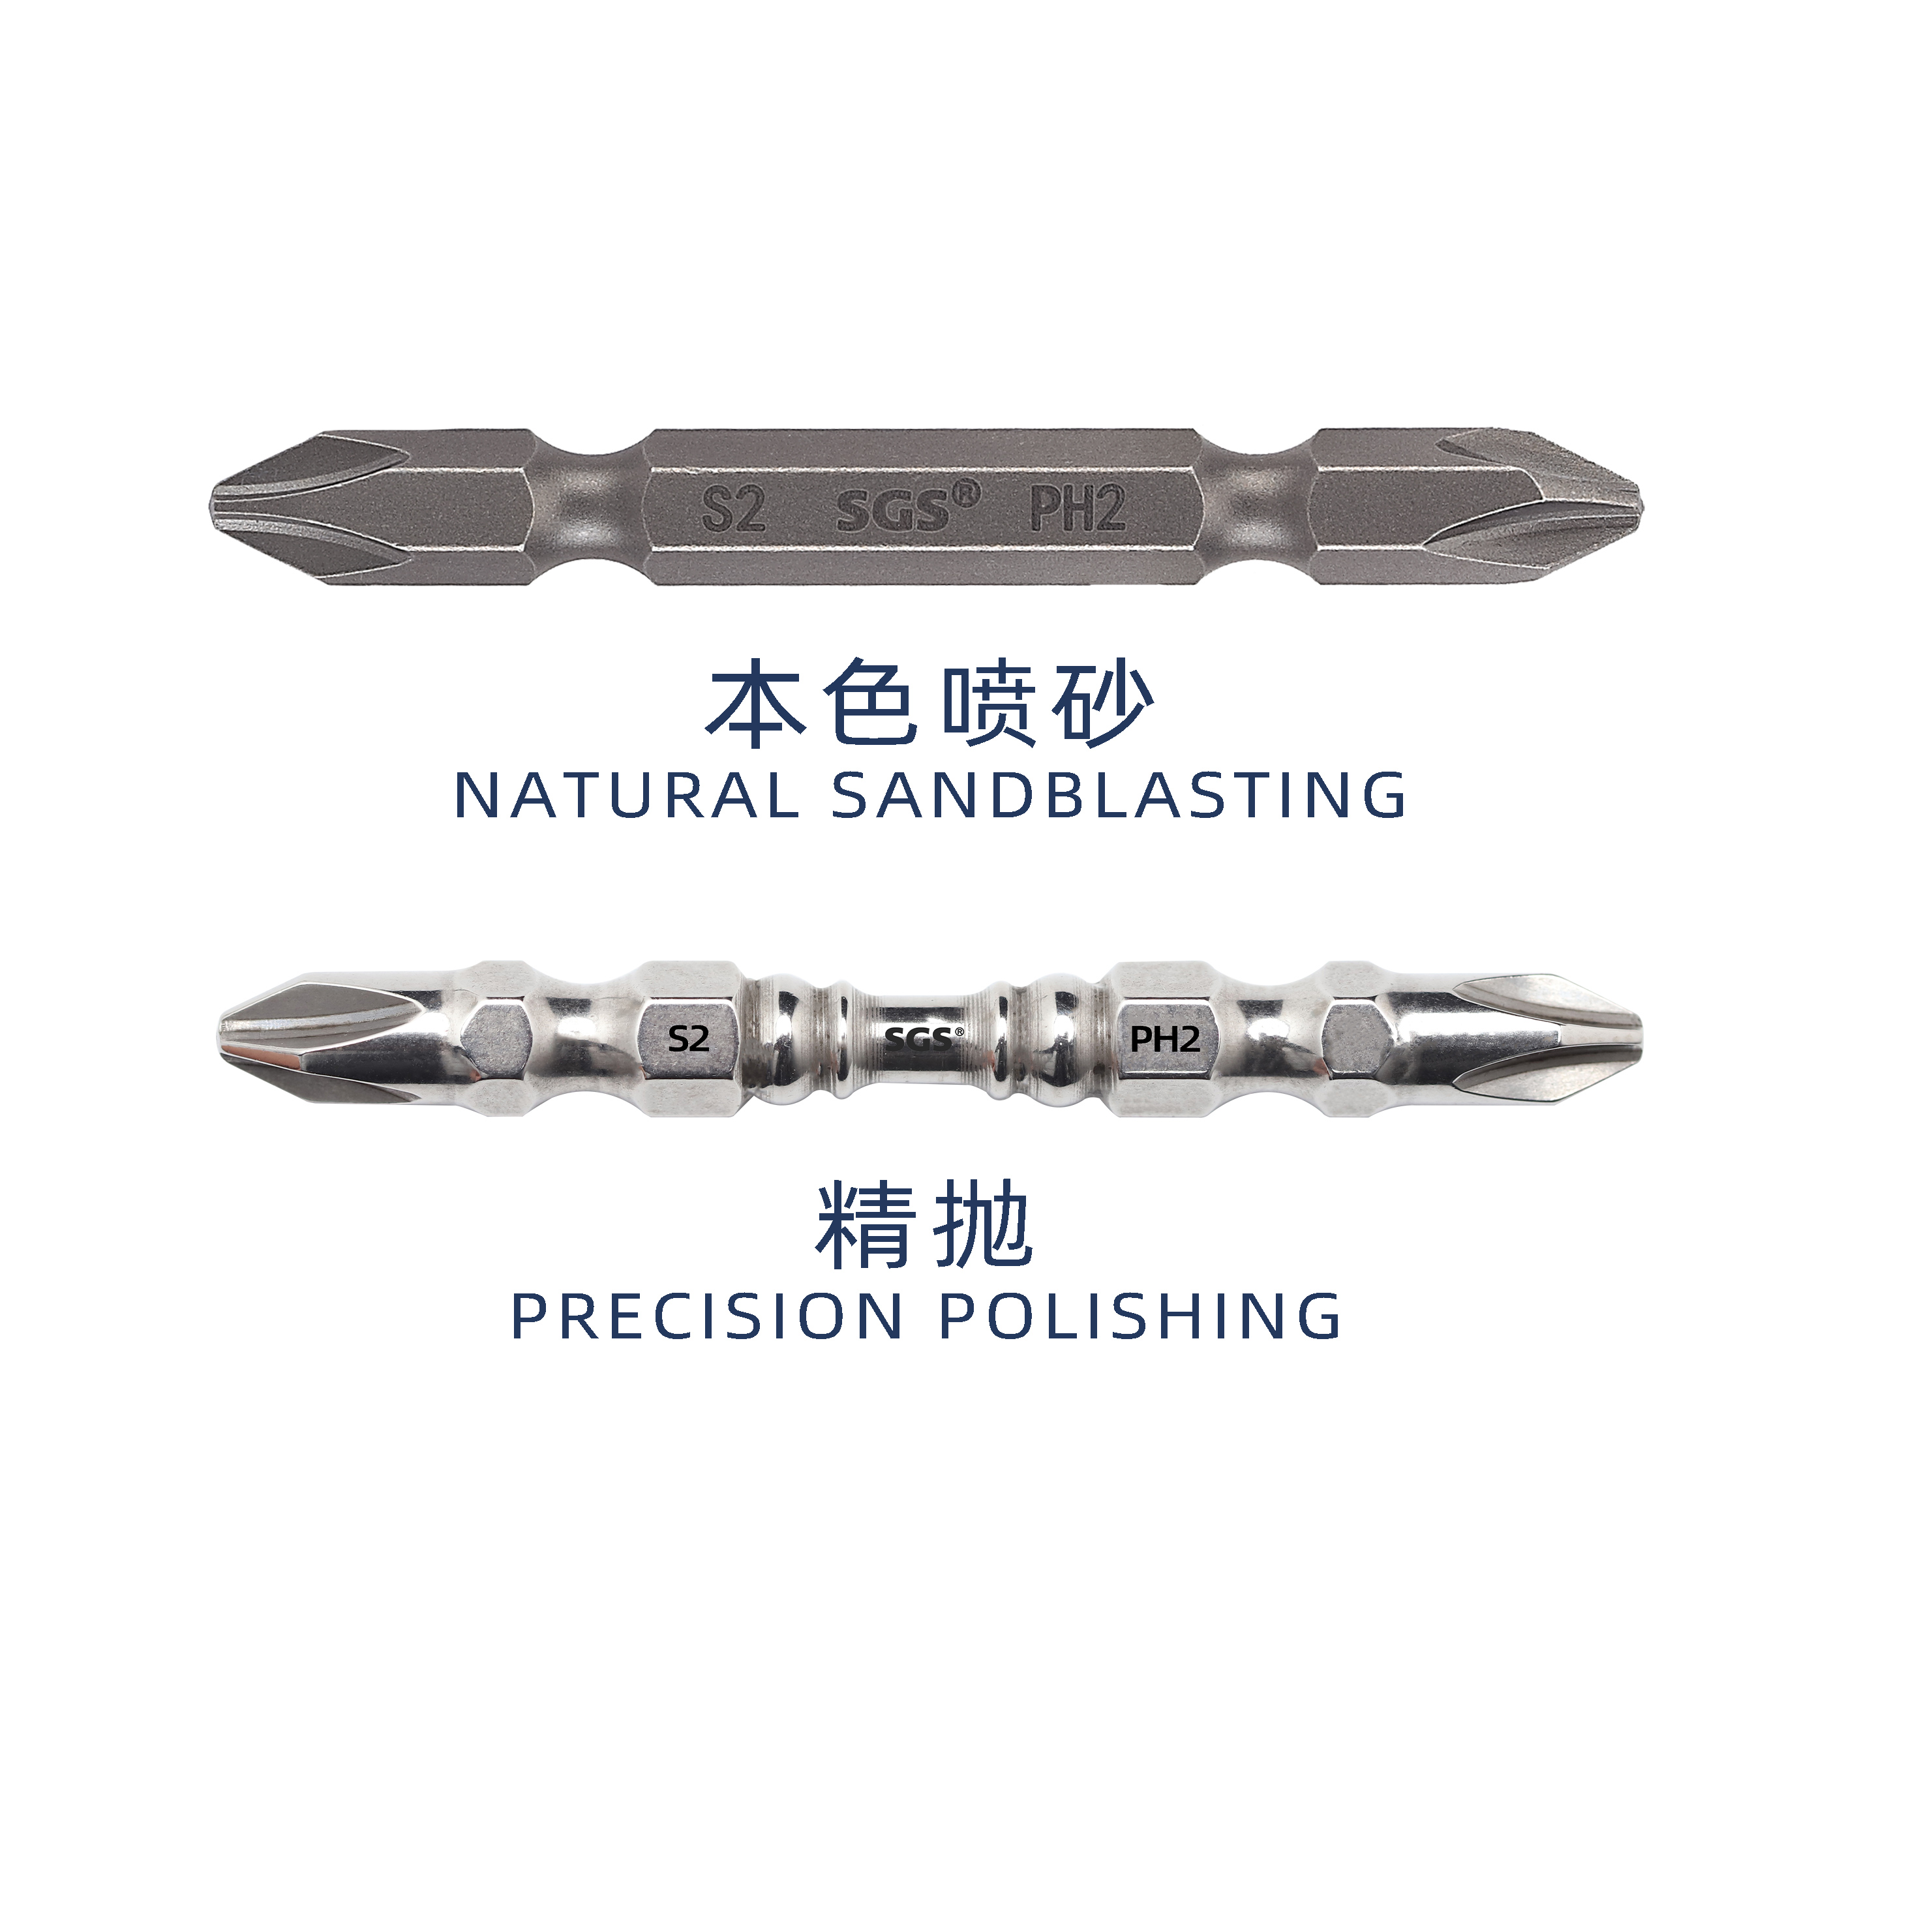 Natural sandblasting&Precision polishing